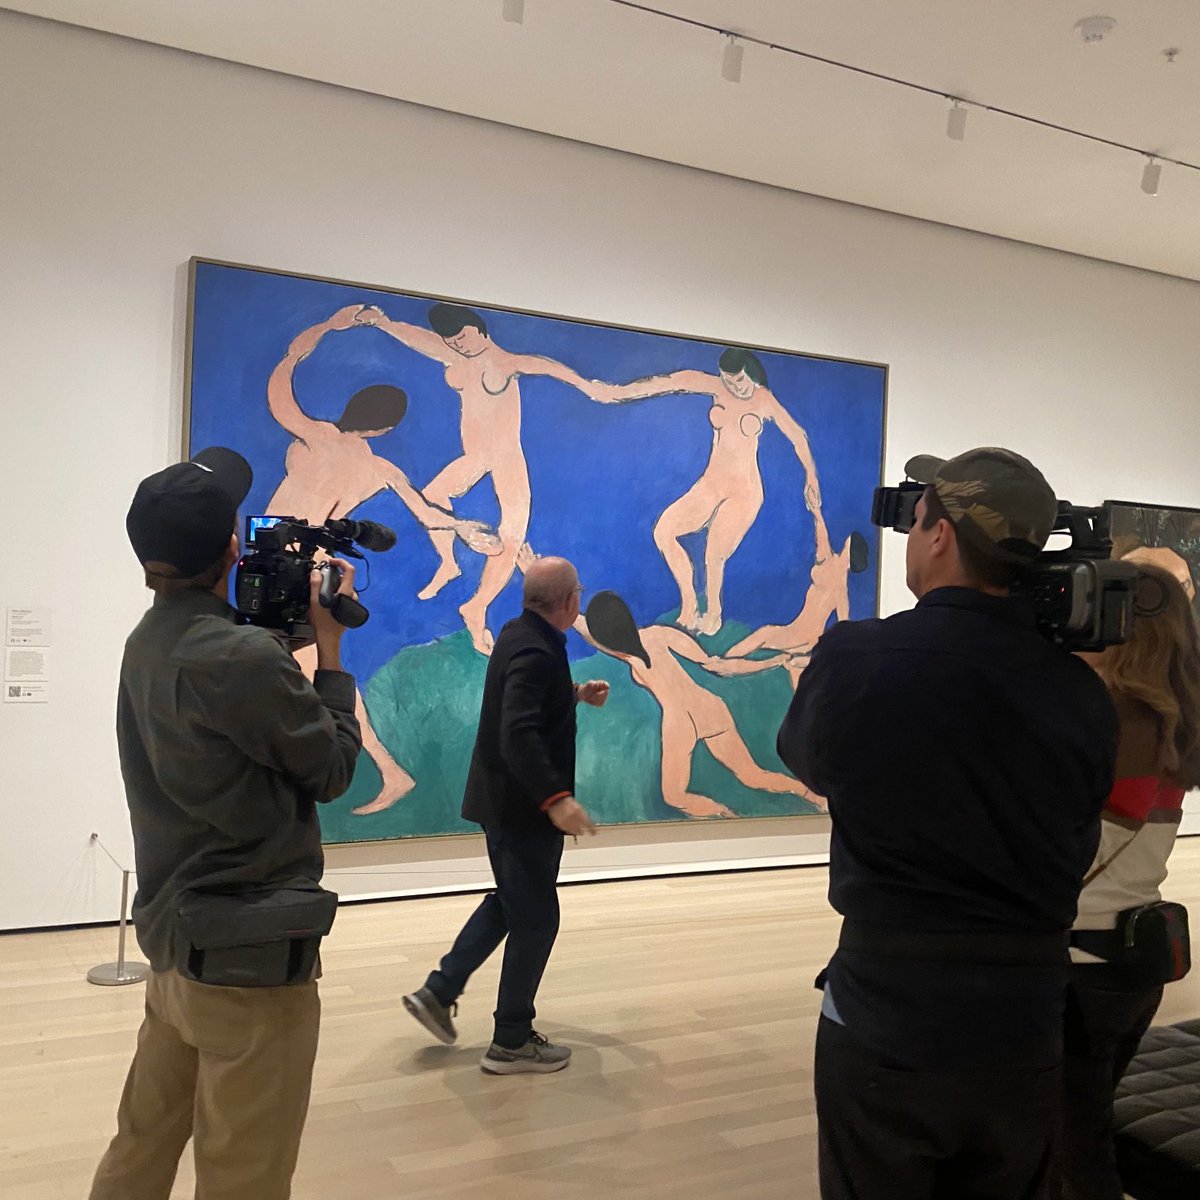 Reacting Matisse’s “The Dance” at ⁦@MuseumModernArt⁩